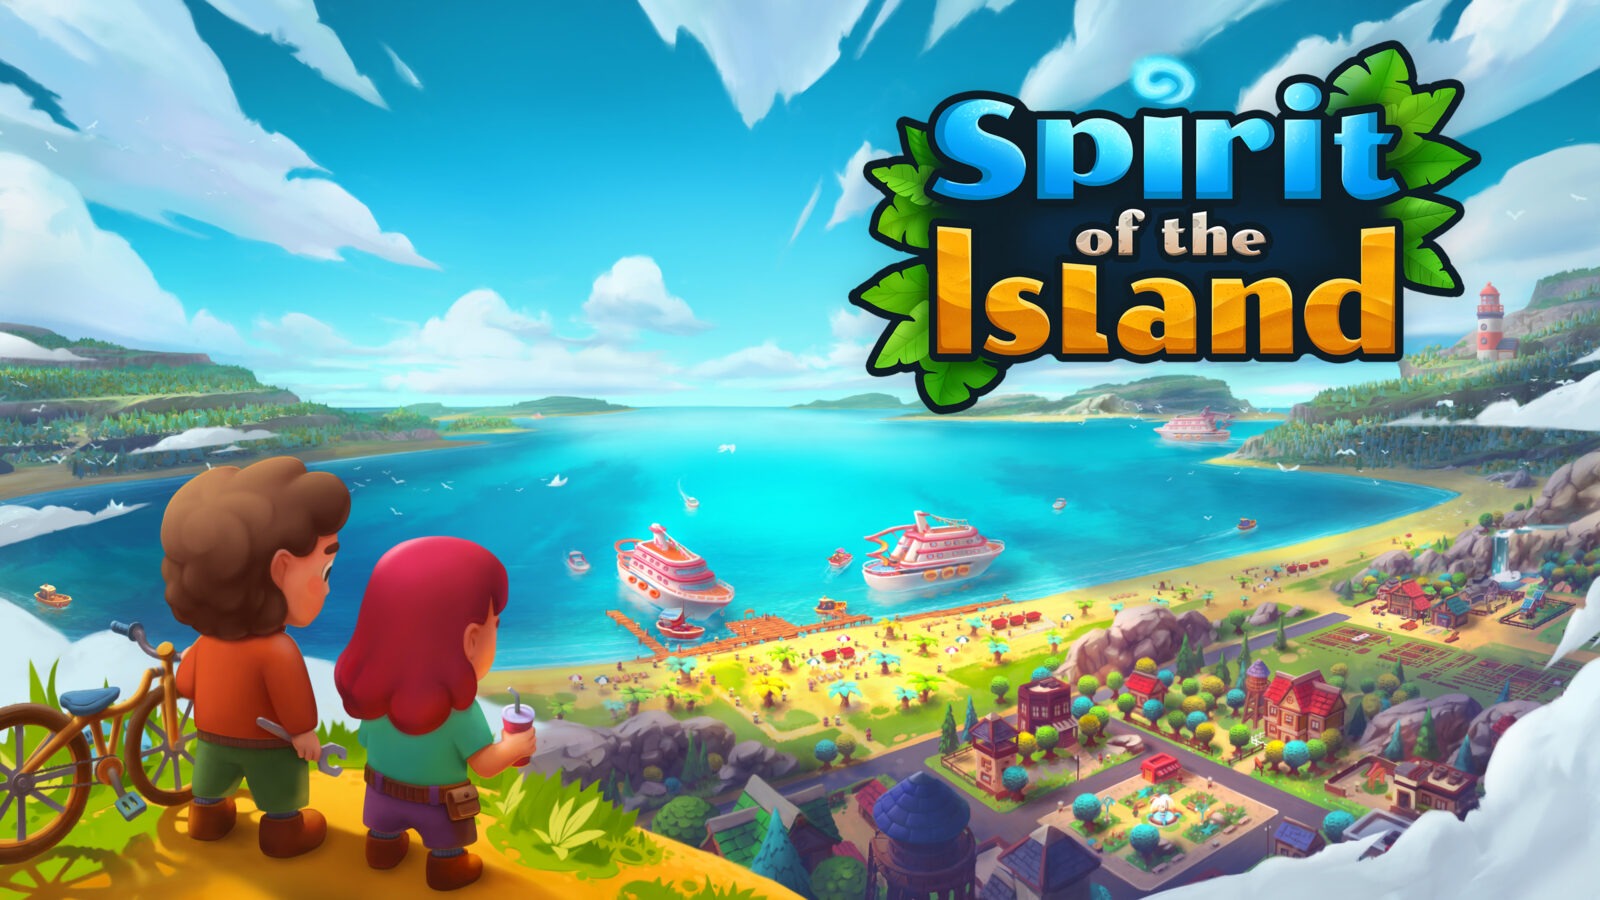 Spirit of the Island - Paradise Edition já está disponível para Nintendo Switch